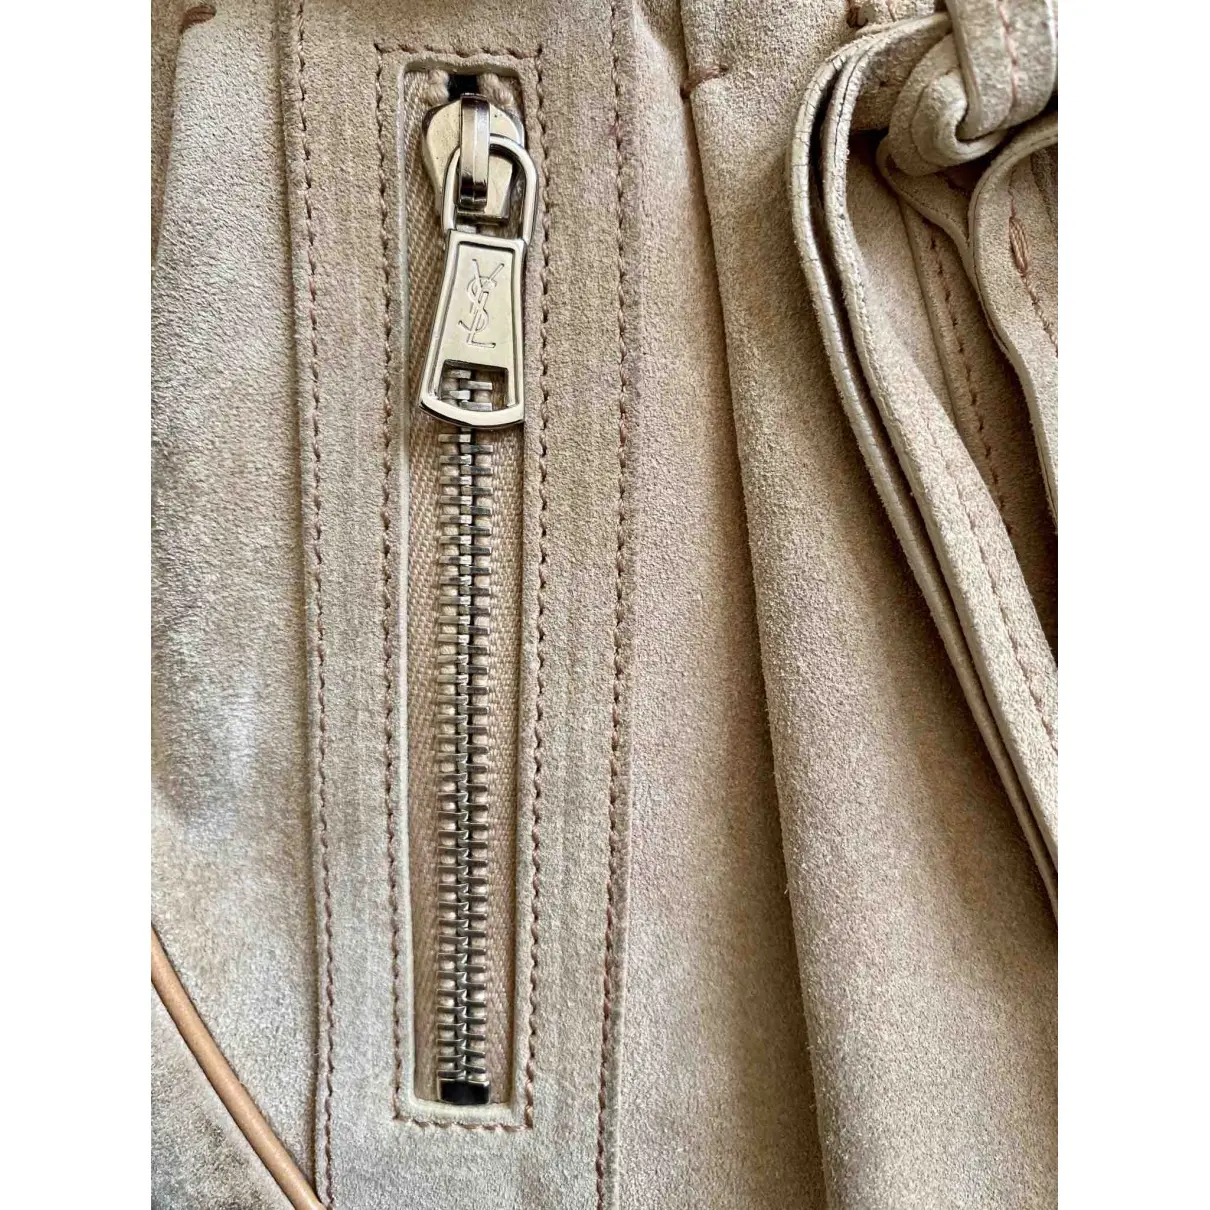 Luxury Yves Saint Laurent Handbags Women - Vintage